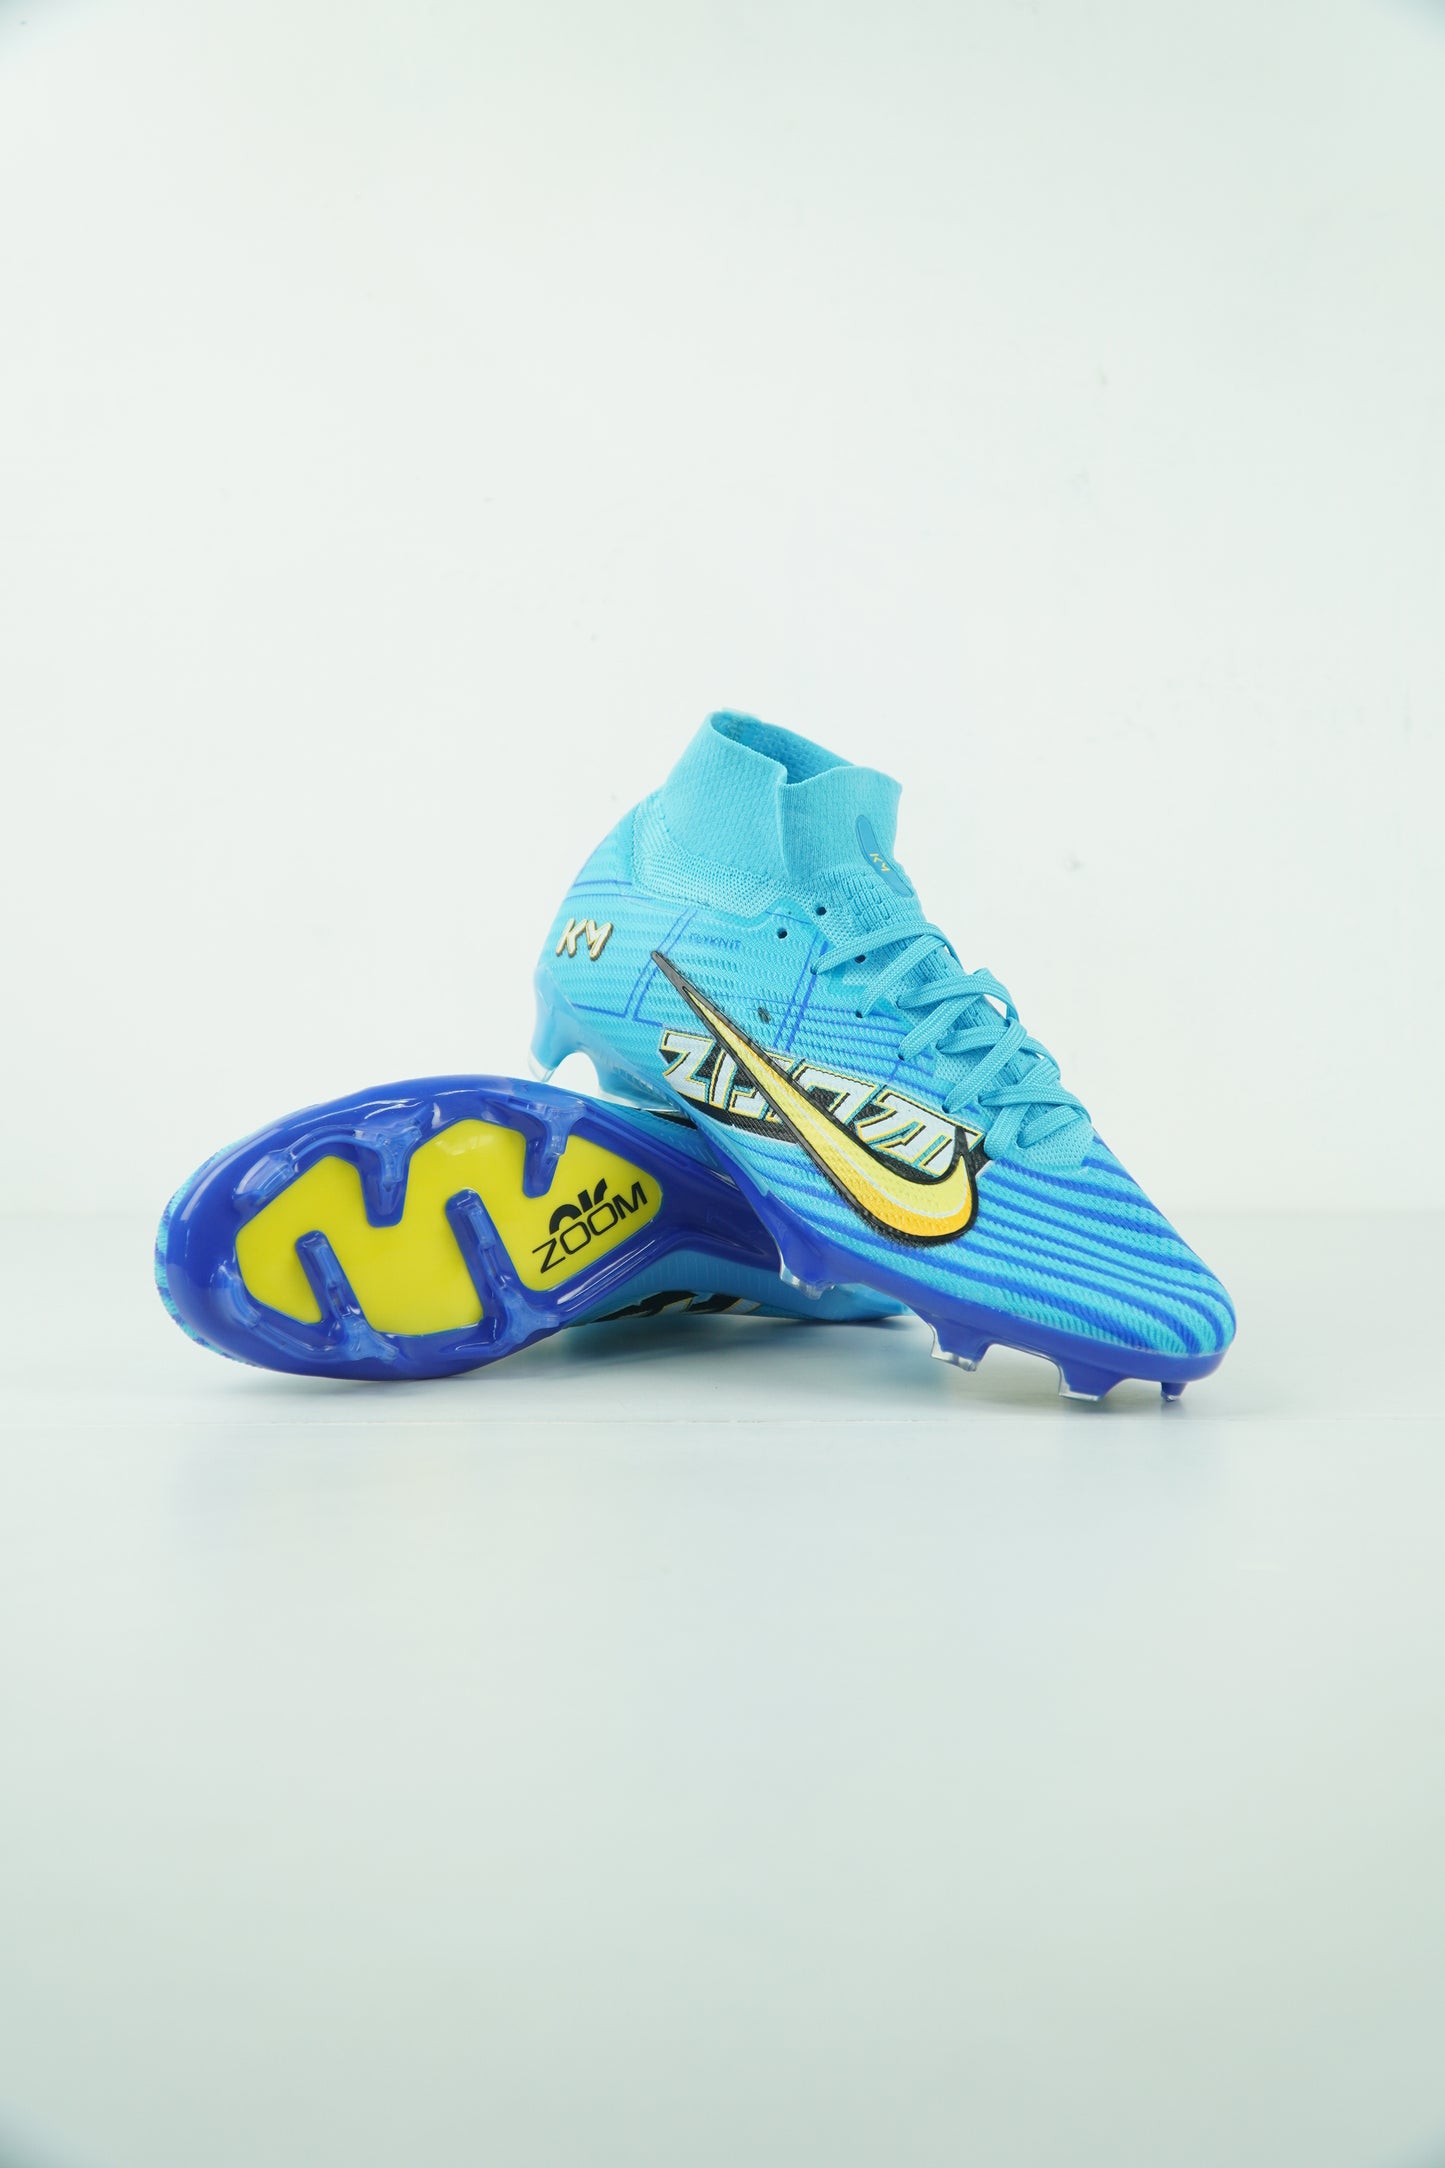 Nike 'Mbappe' Mercurial Air Zoom FG Blue Football Shoes